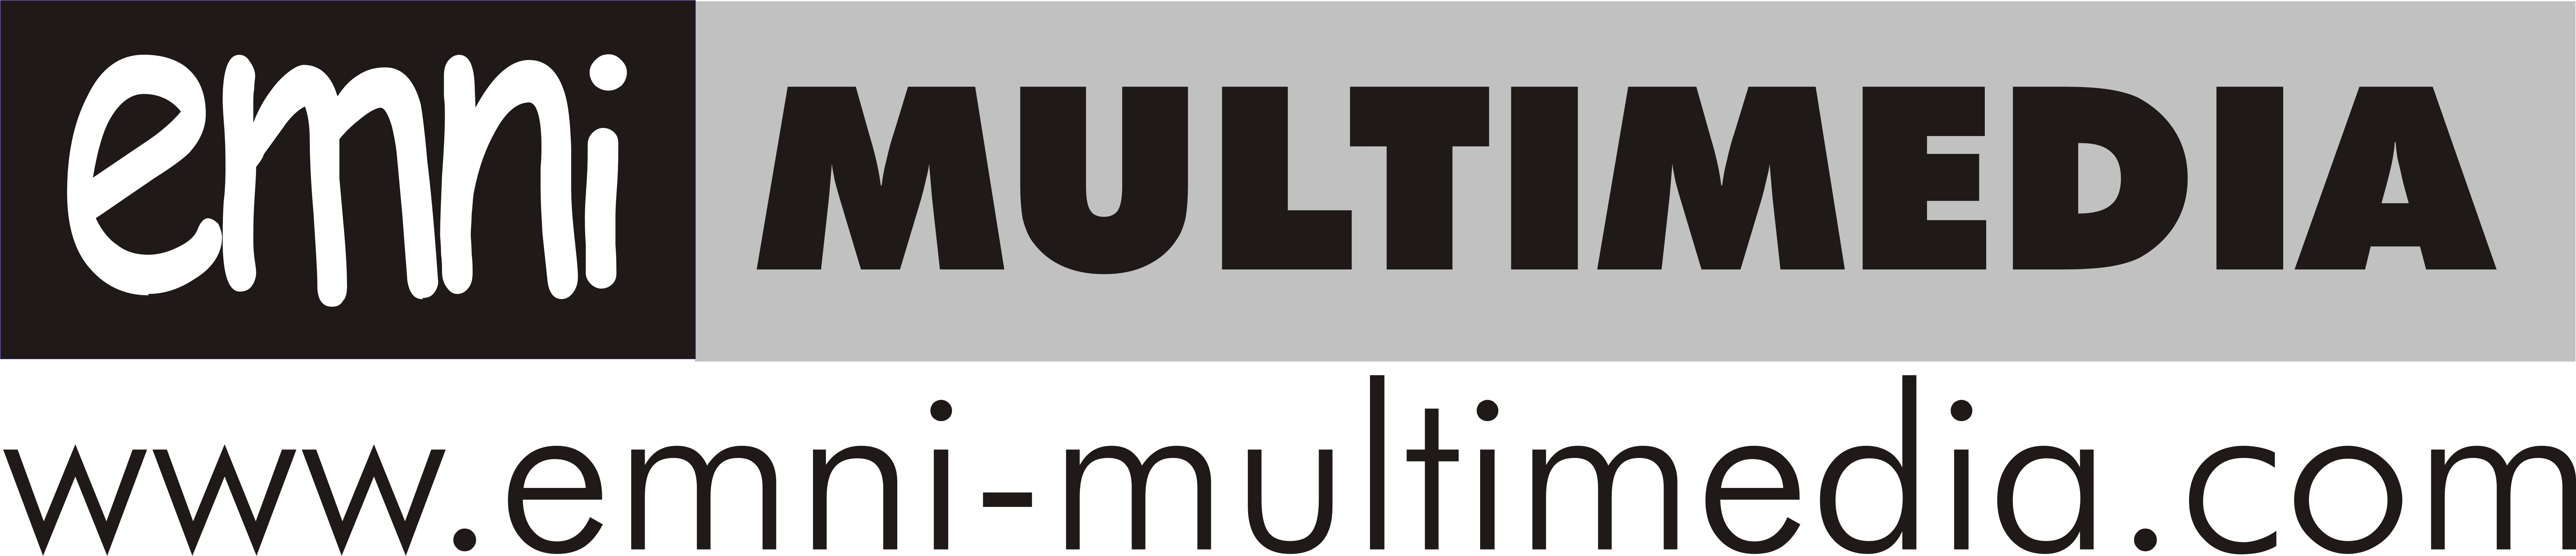 Logo Emni multimedia